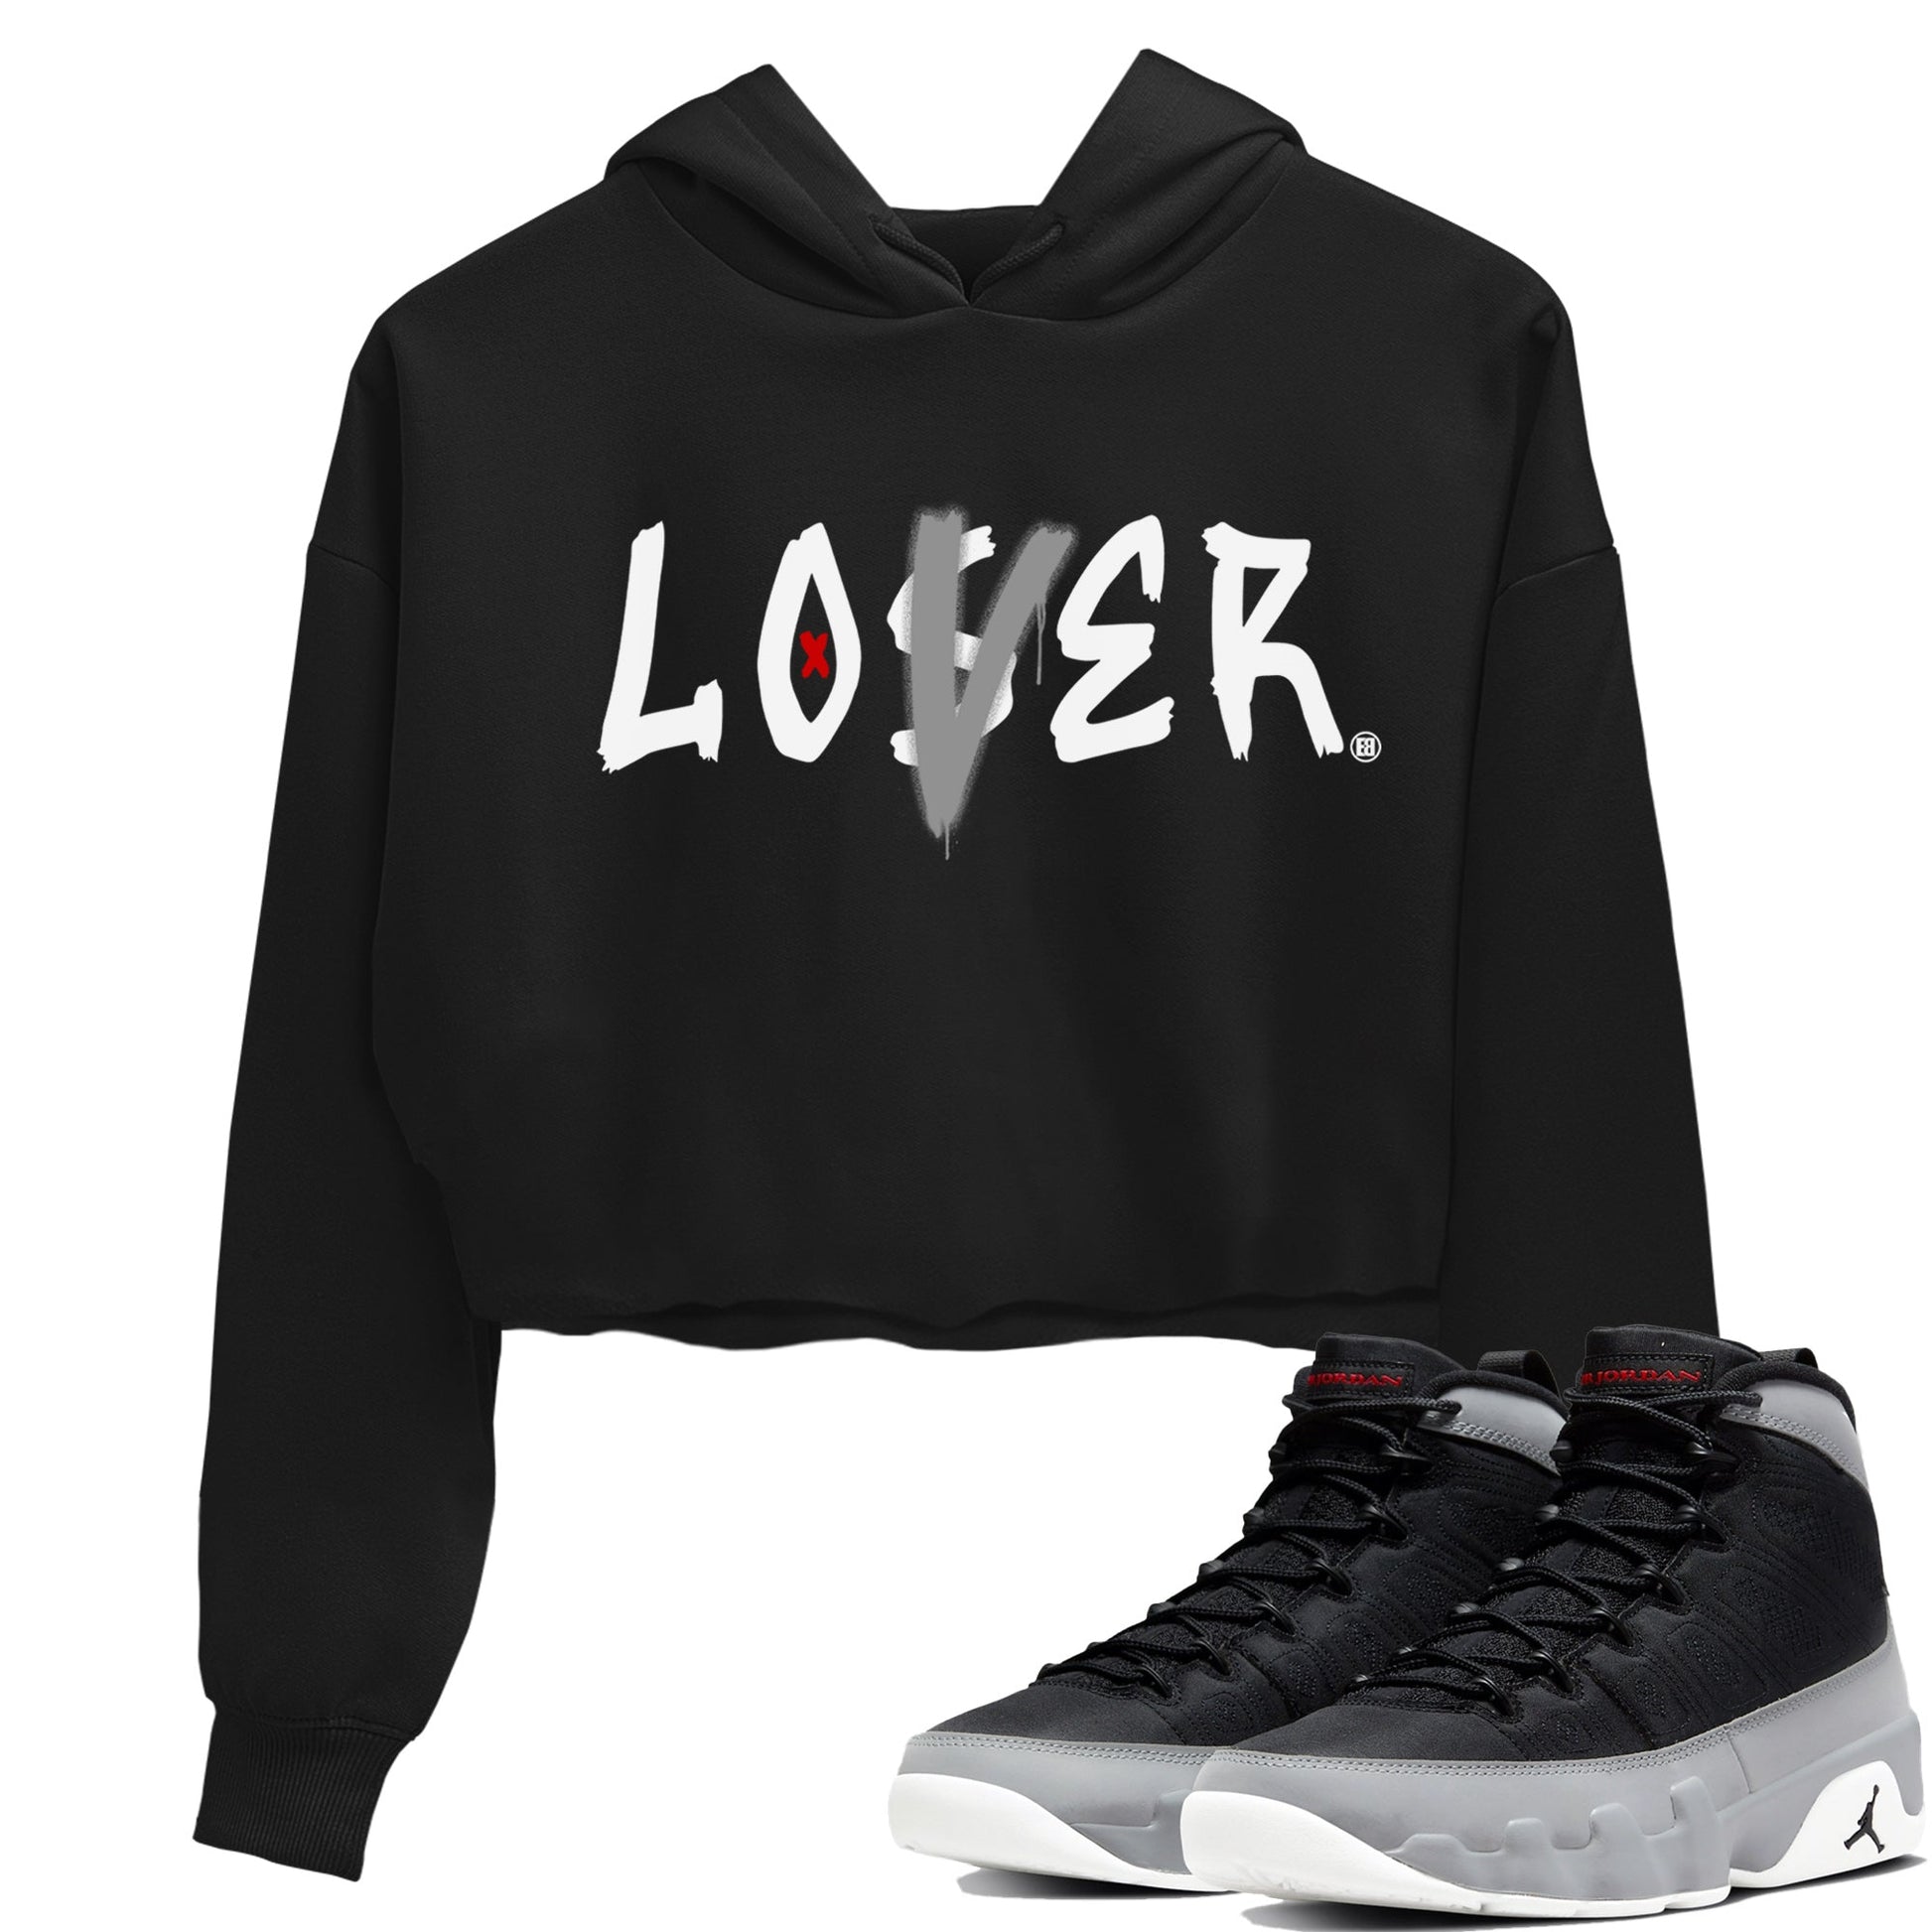 Jordan 9 Particle Grey Sneaker Match Tees Loser Lover Sneaker Tees Jordan 9 Particle Grey Sneaker Release Tees Women's Shirts